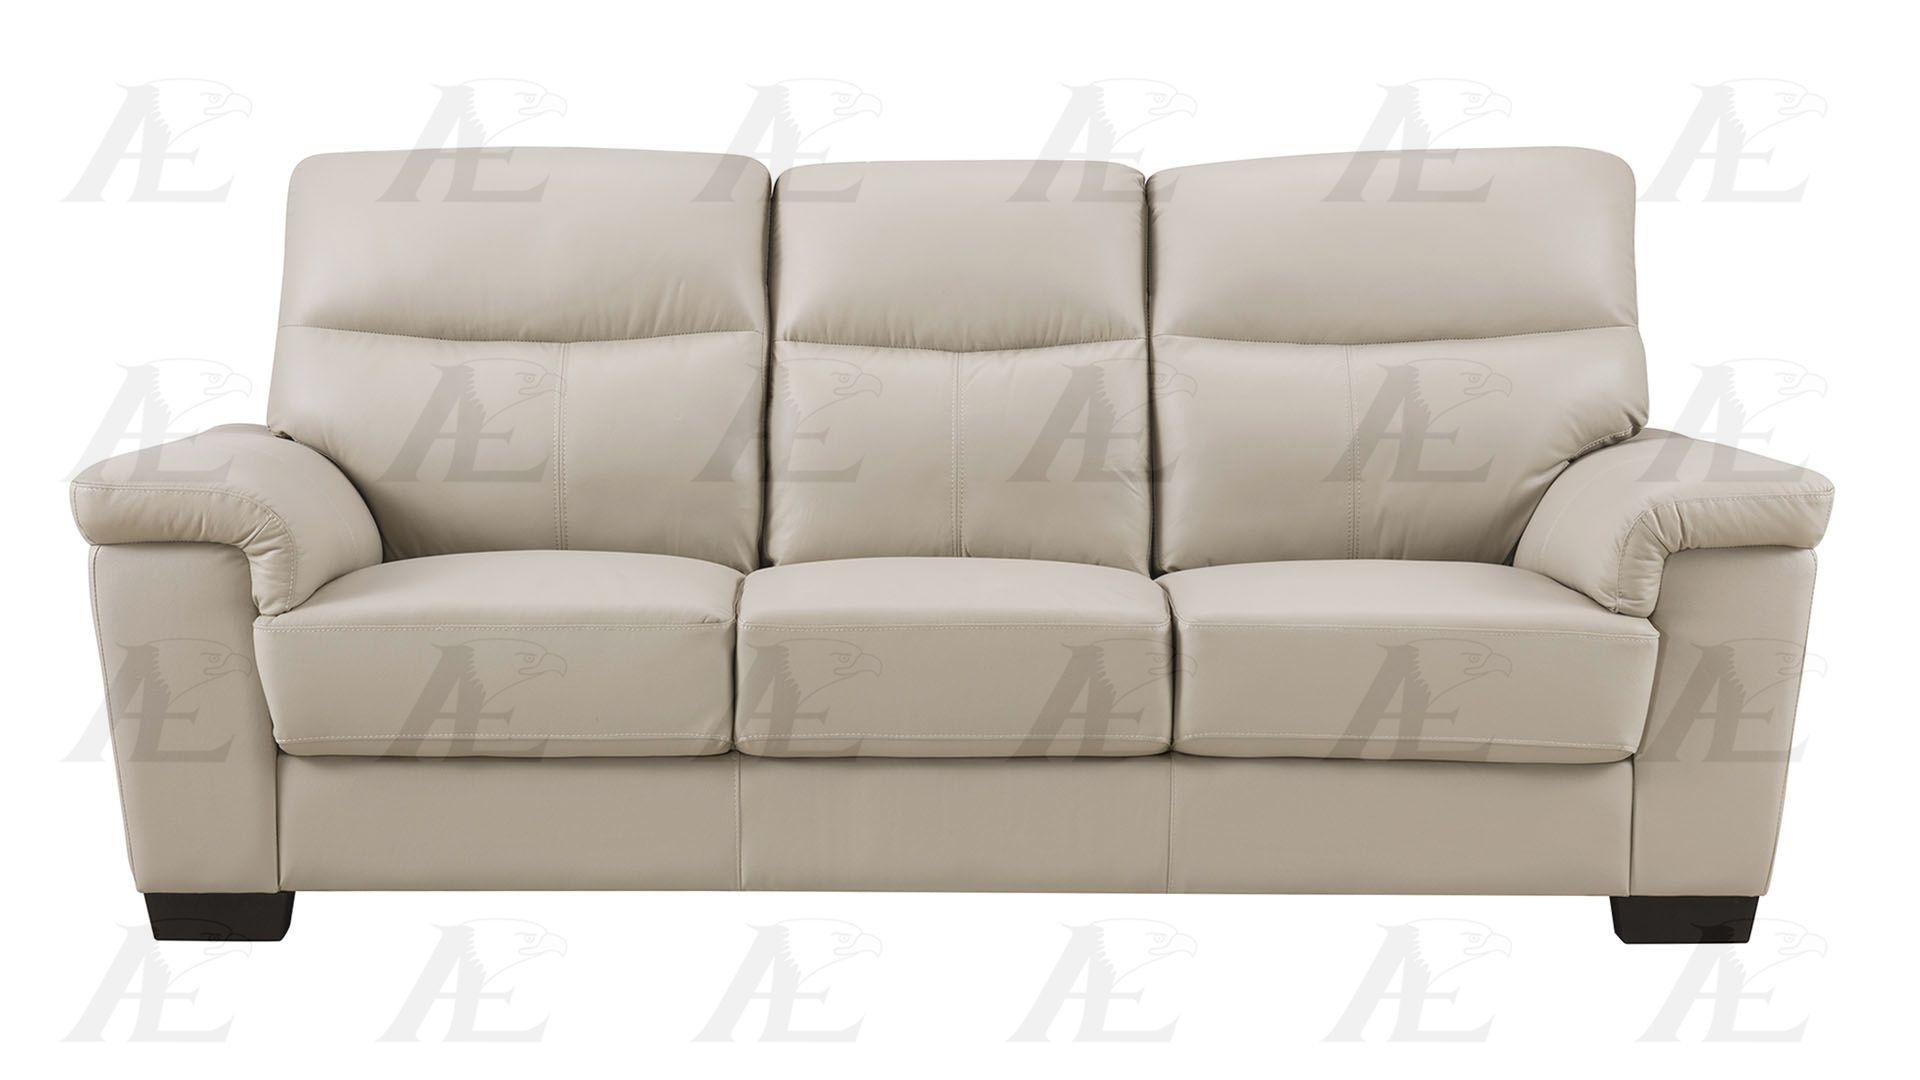 

    
American Eagle EK515 Light Gray Genuine Leather Living Room Sofa Set 2pcs in Contemporary Style
